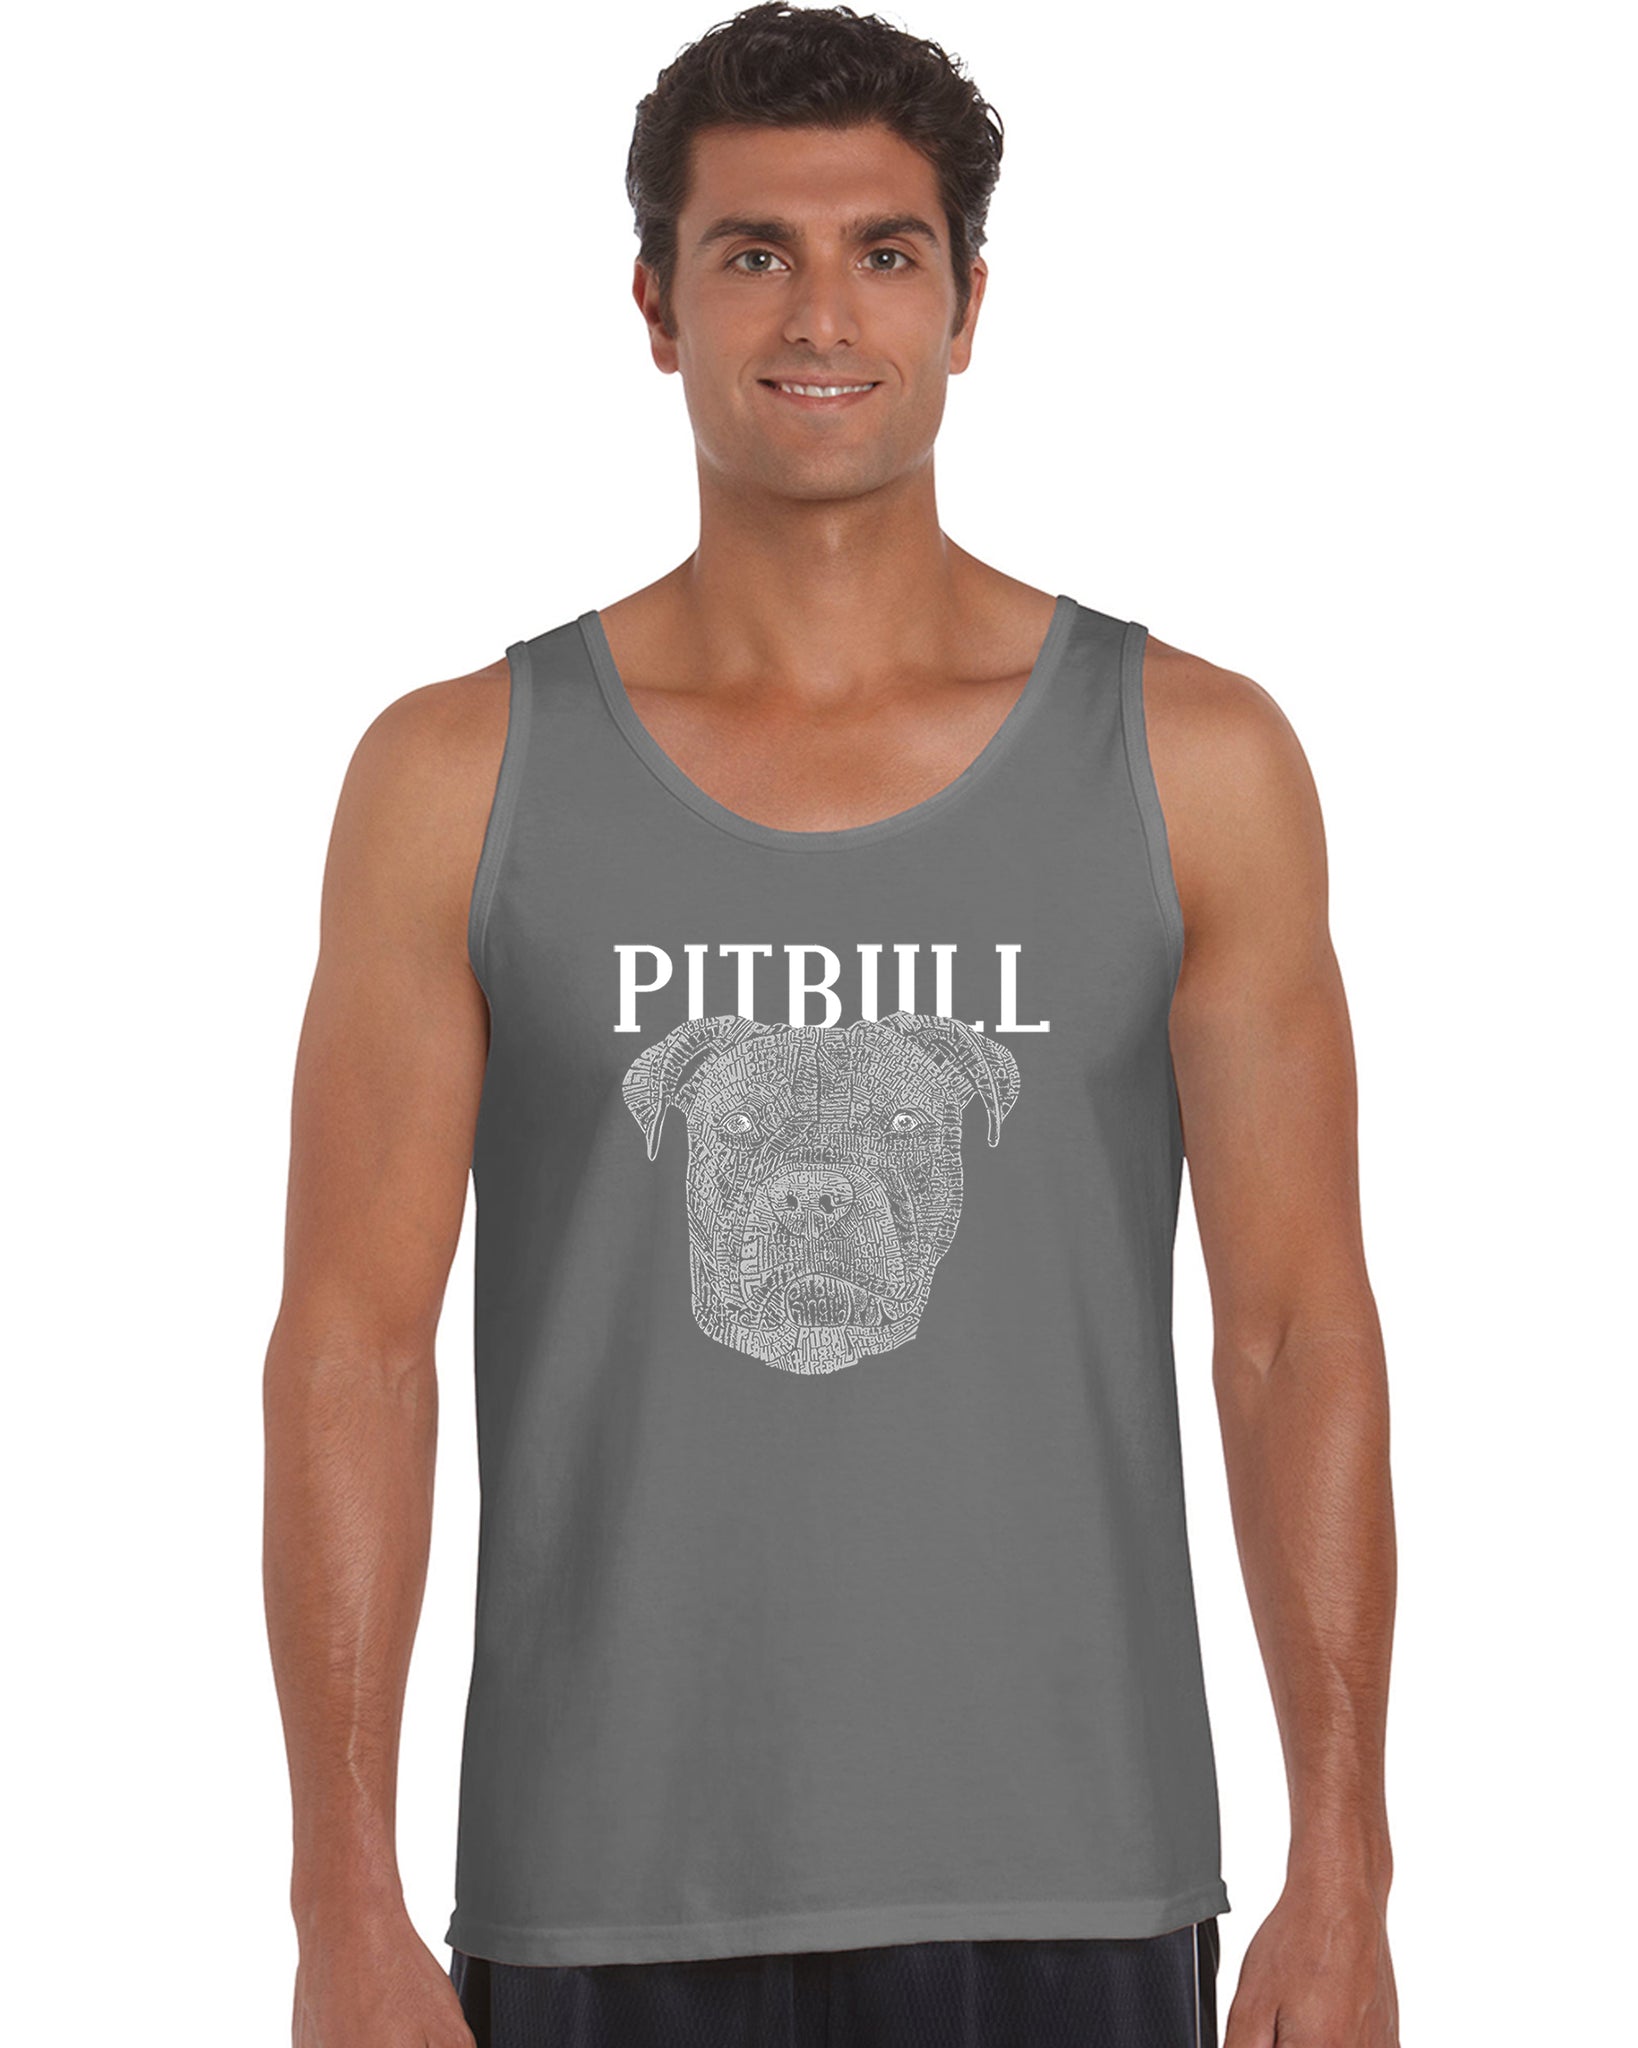 Mens Pit Bull Shirt Big Pit Bull Face Muscle Tee T-Shirt